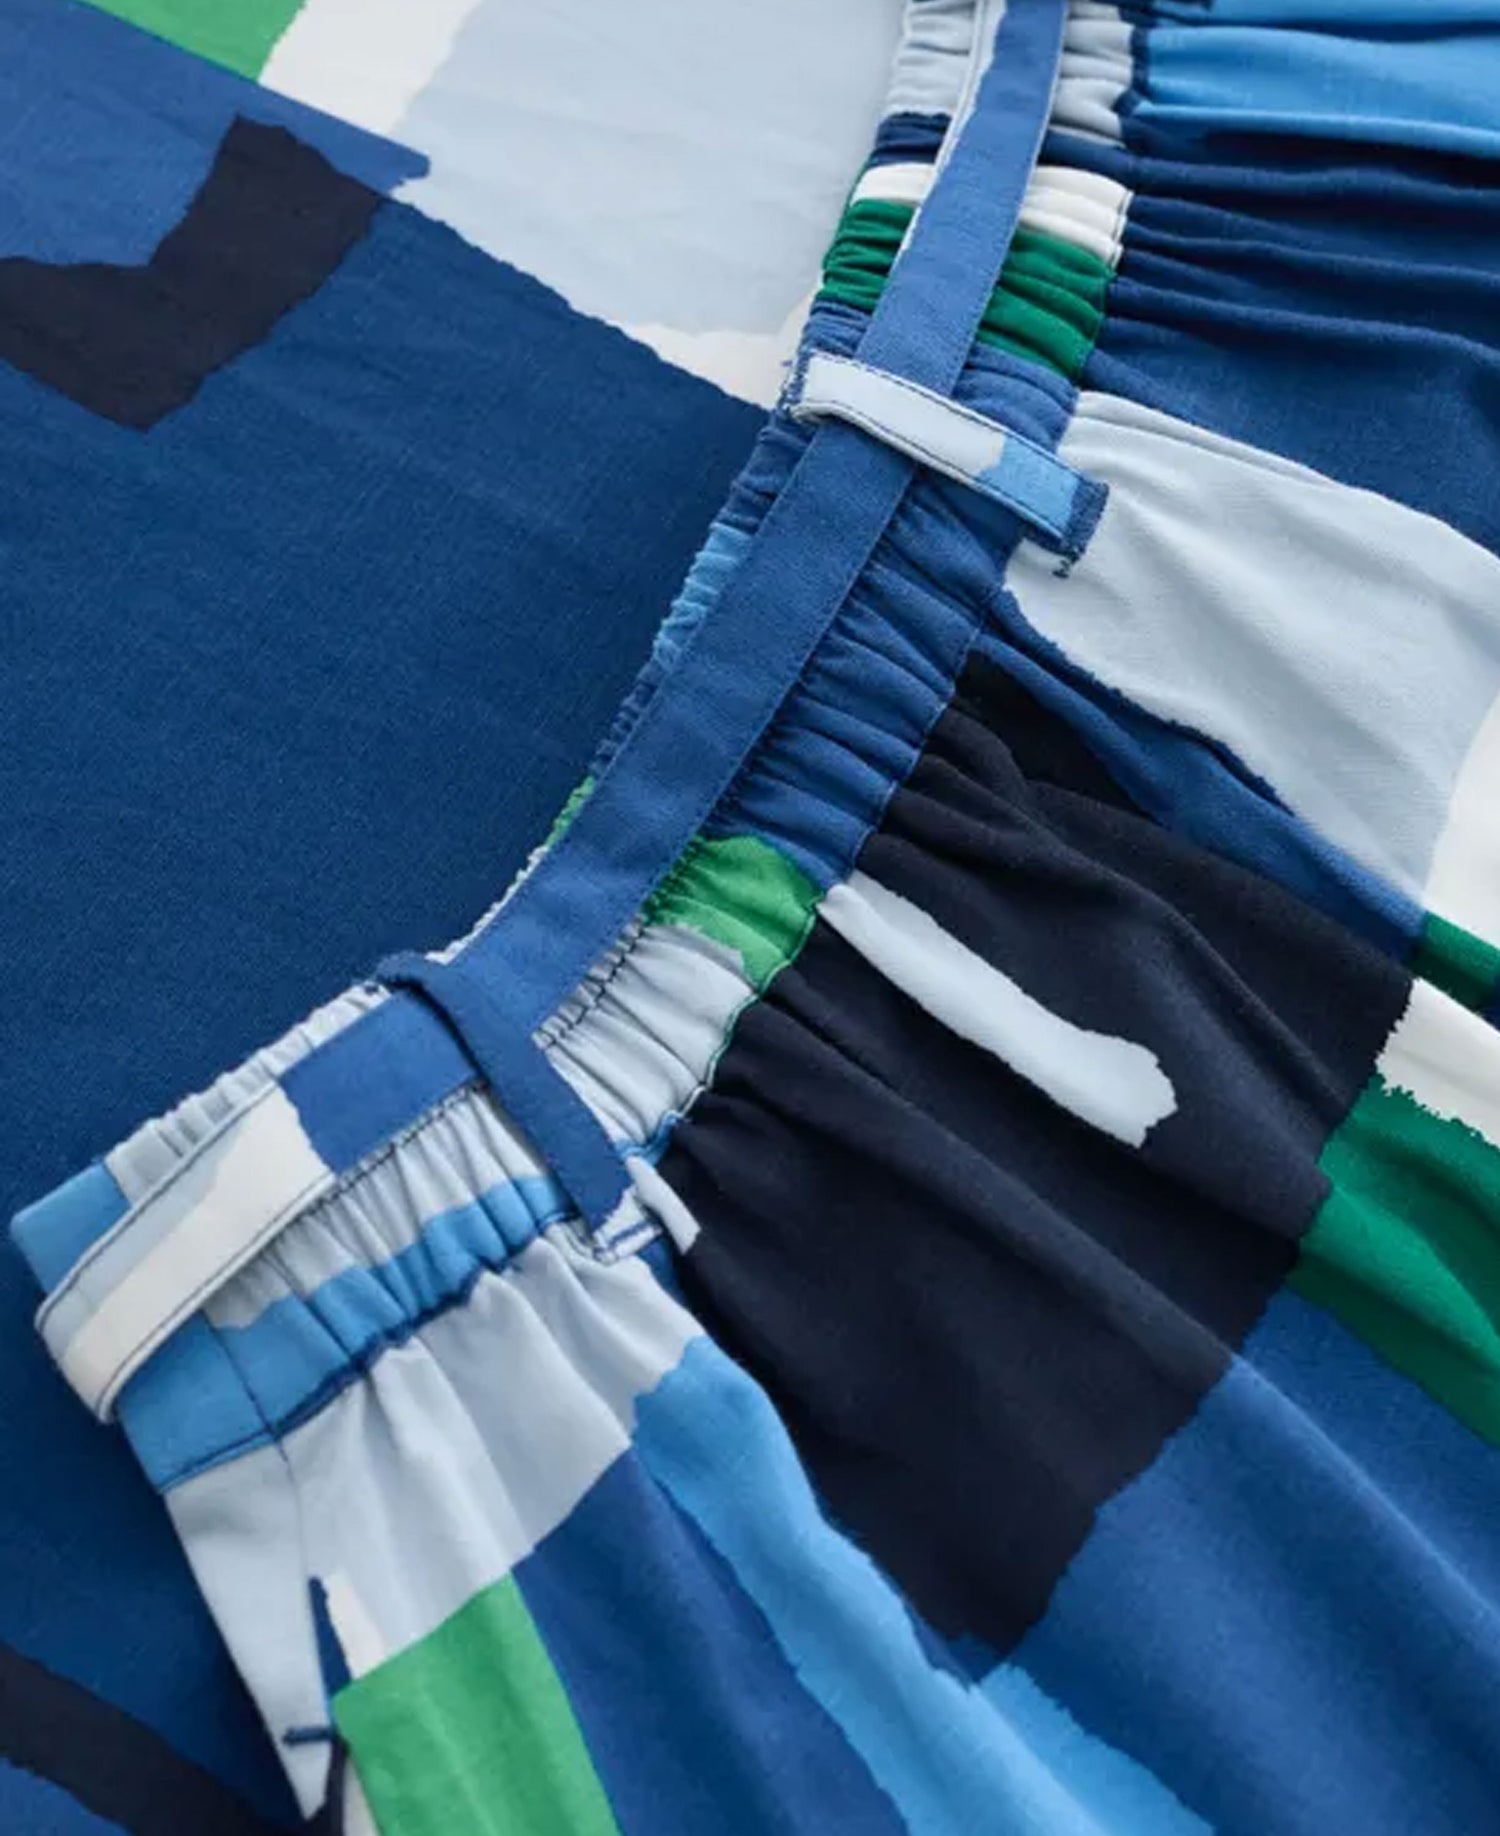 Allantide Pleated Printed Midi Skirt - Francis Collage Blue Jay